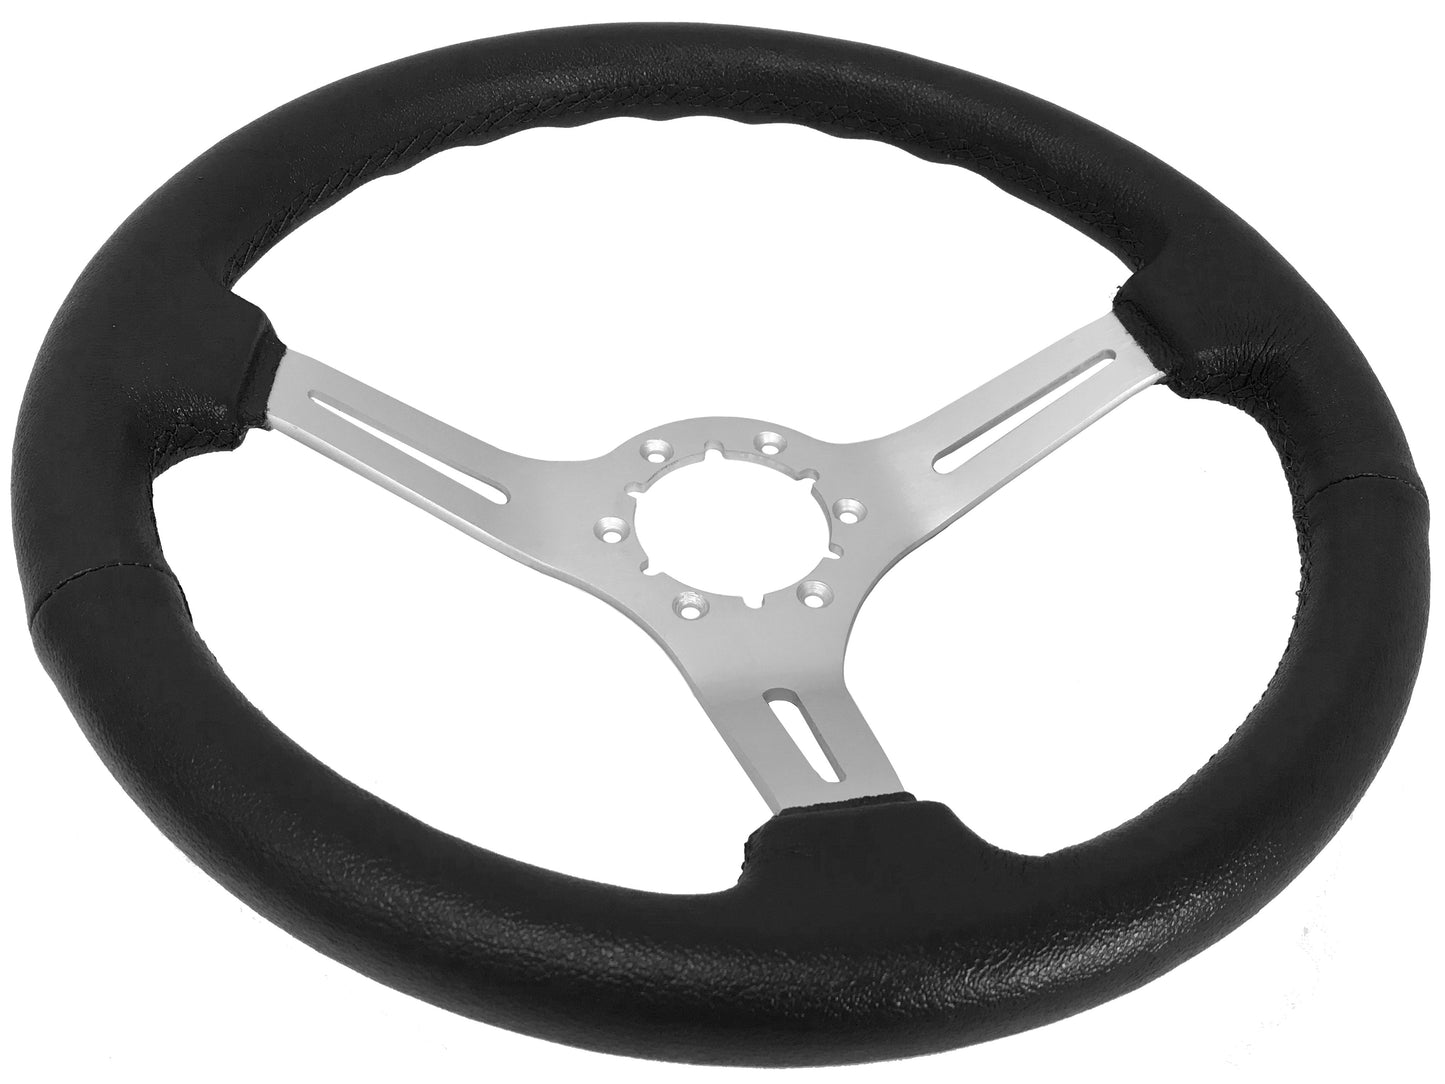 1969-89 Camaro Steering Wheel Kit | Black Leather | ST3014BLK